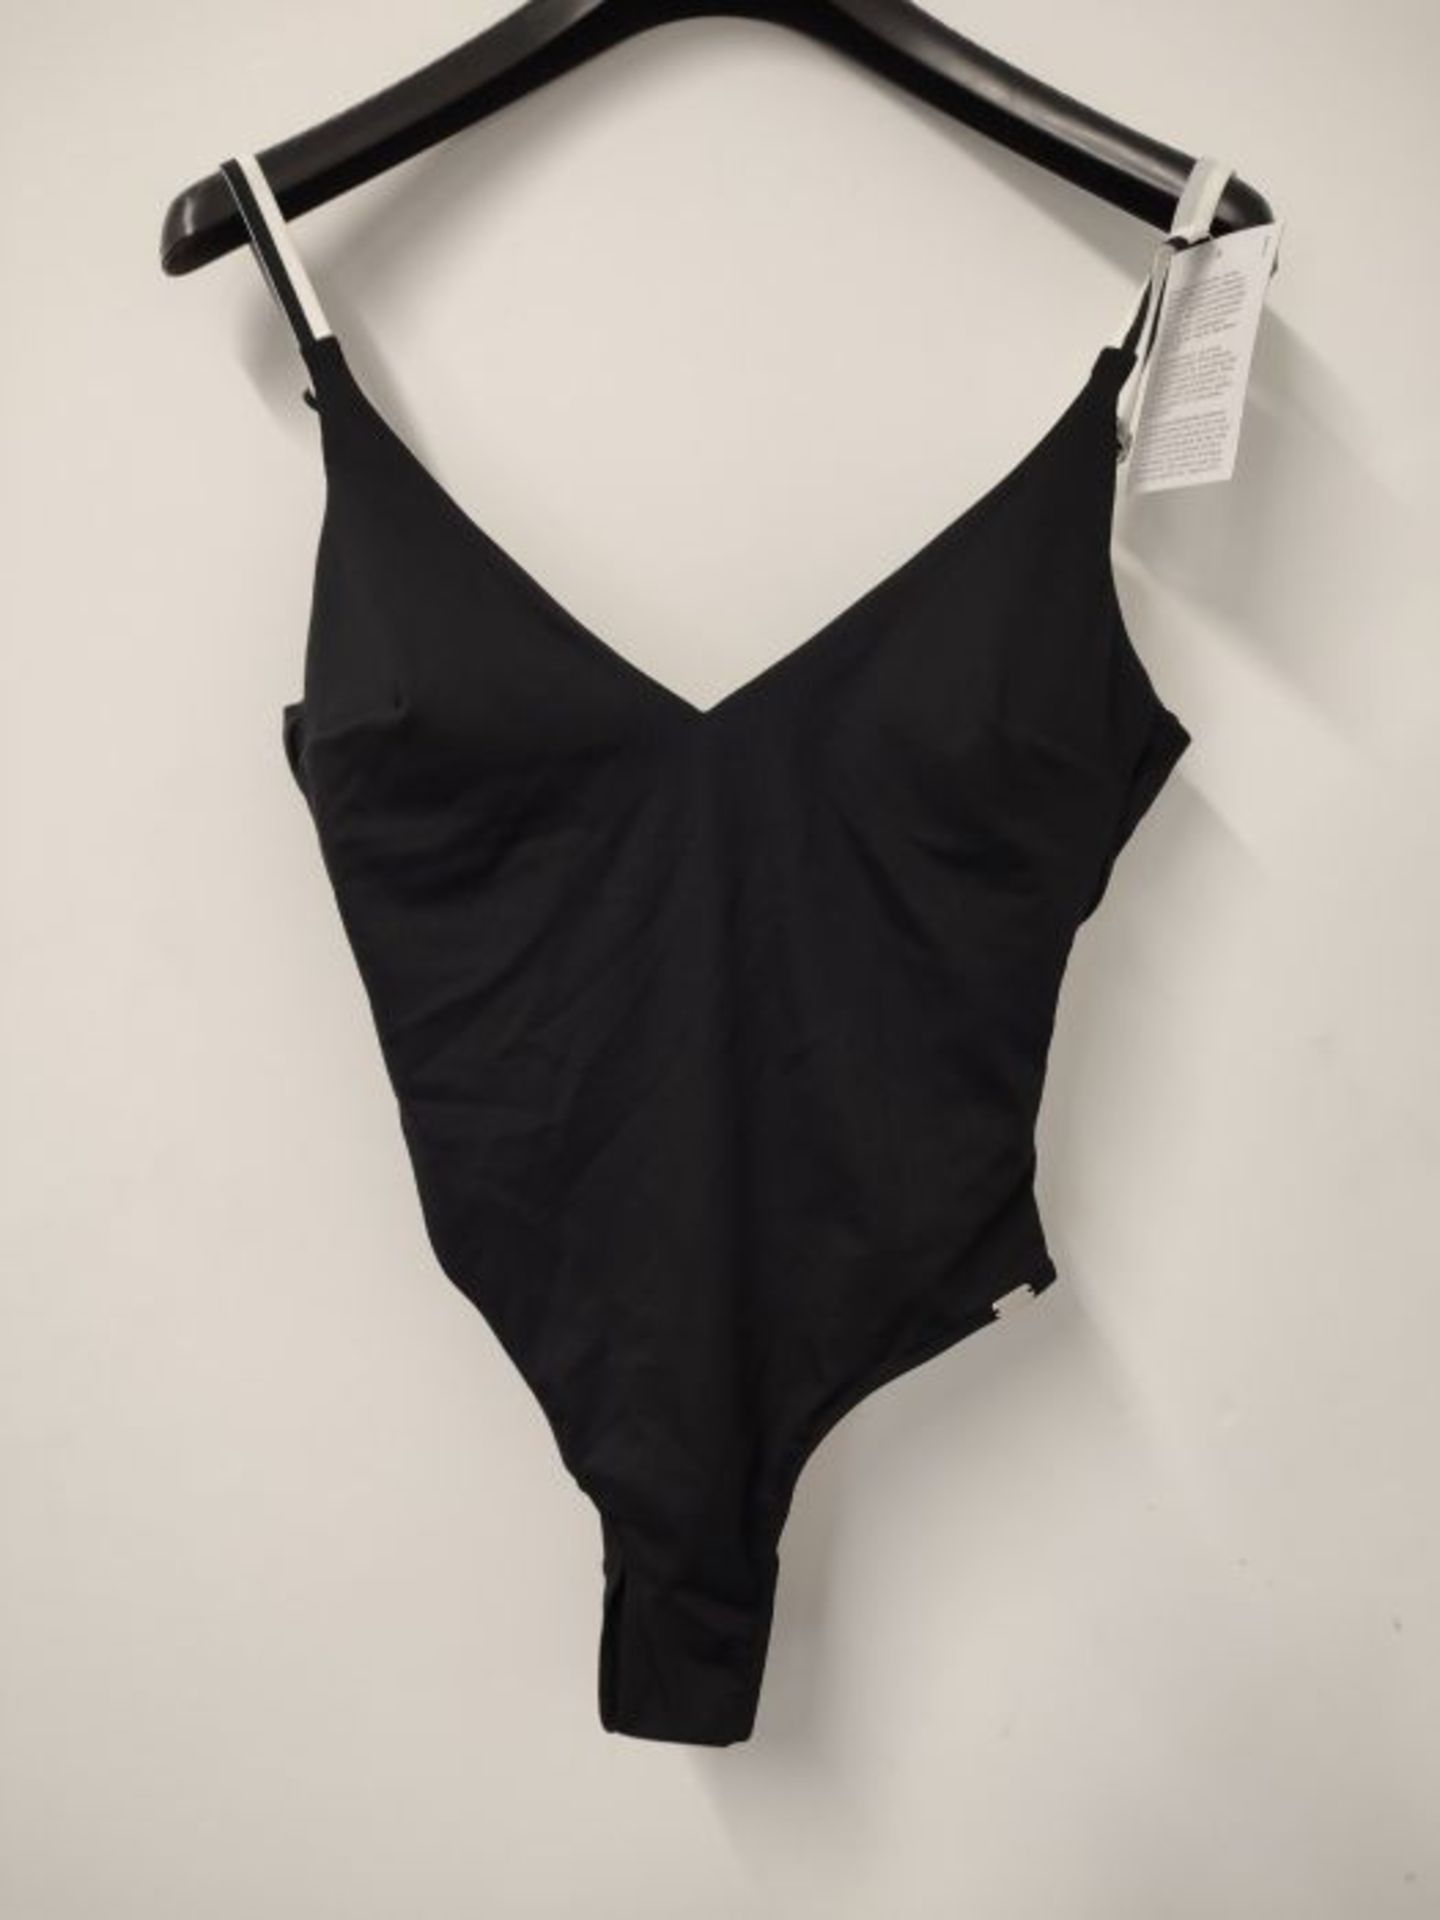 Schiesser Women's Badeanzug One Piece Swimsuit, Black, M - Image 2 of 2